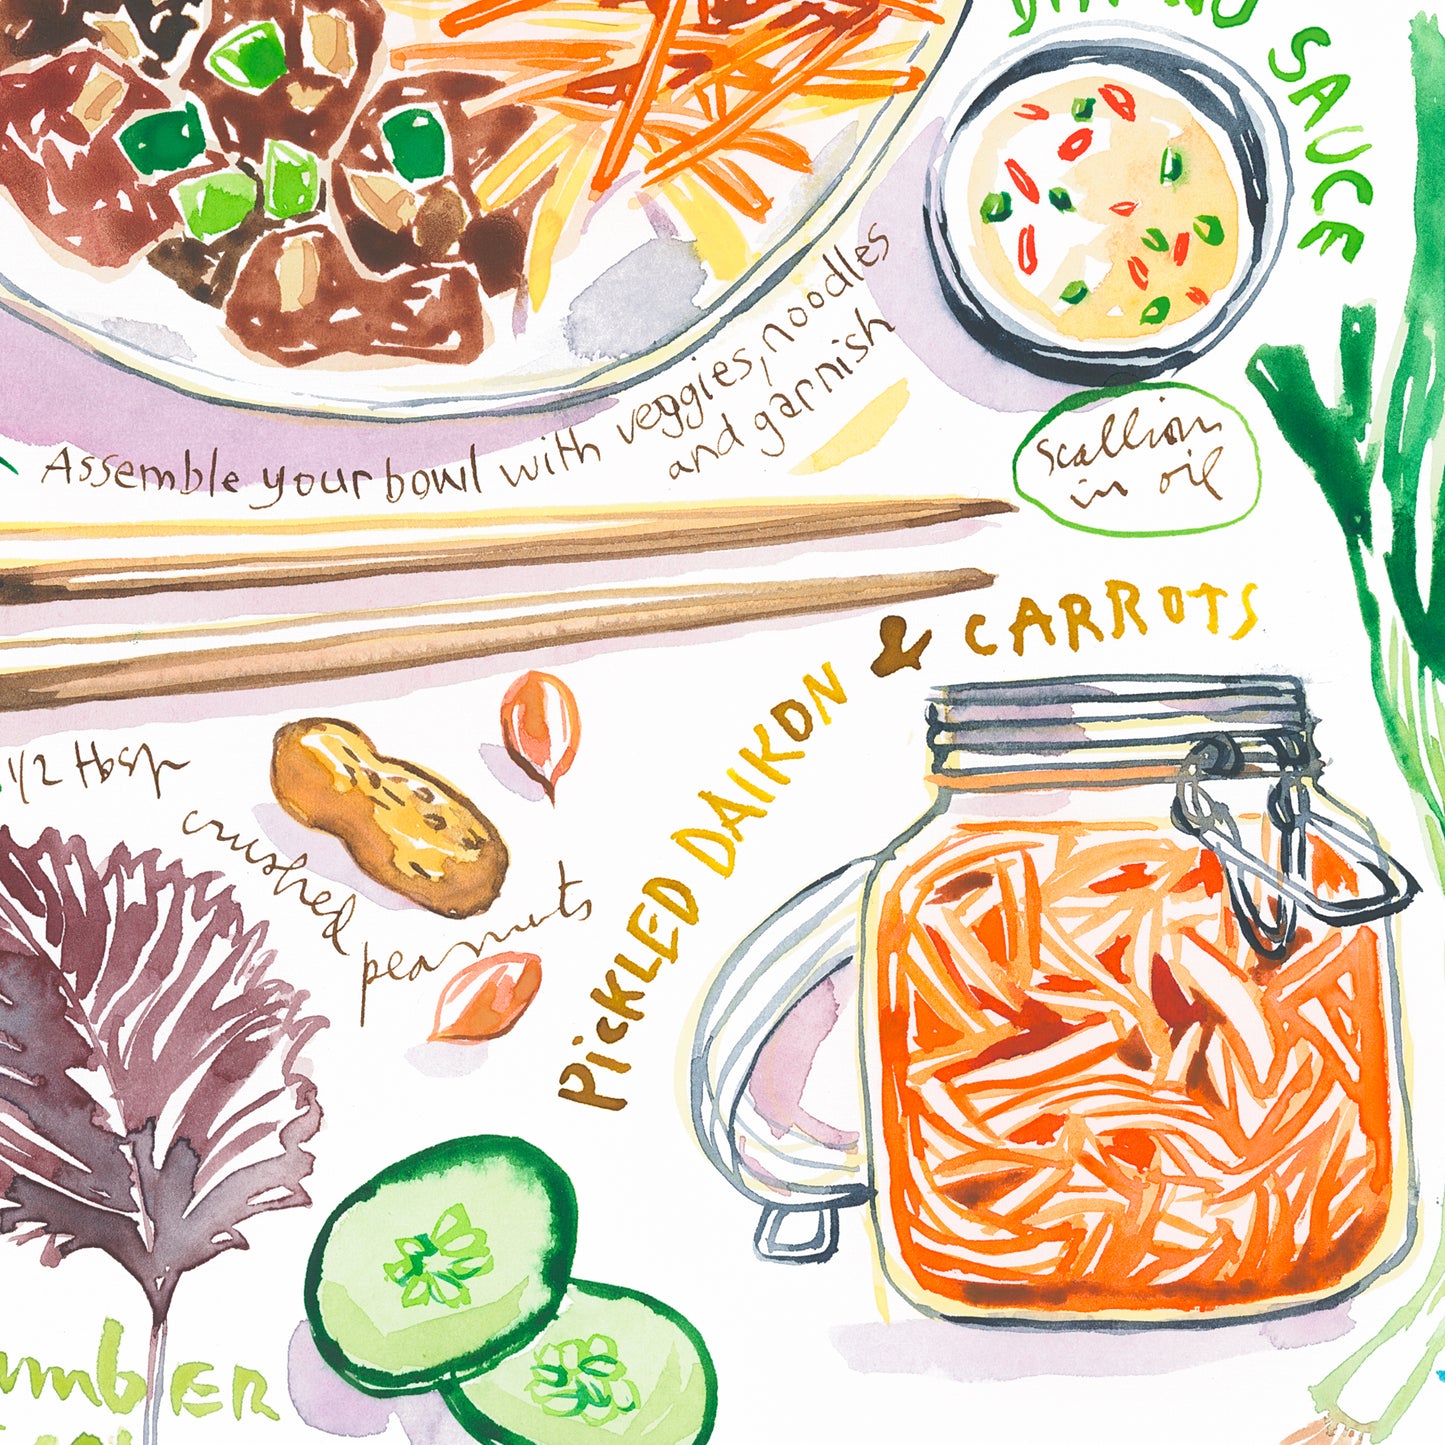 Vietnamese Rice Noodles Bowl with Pork recipe